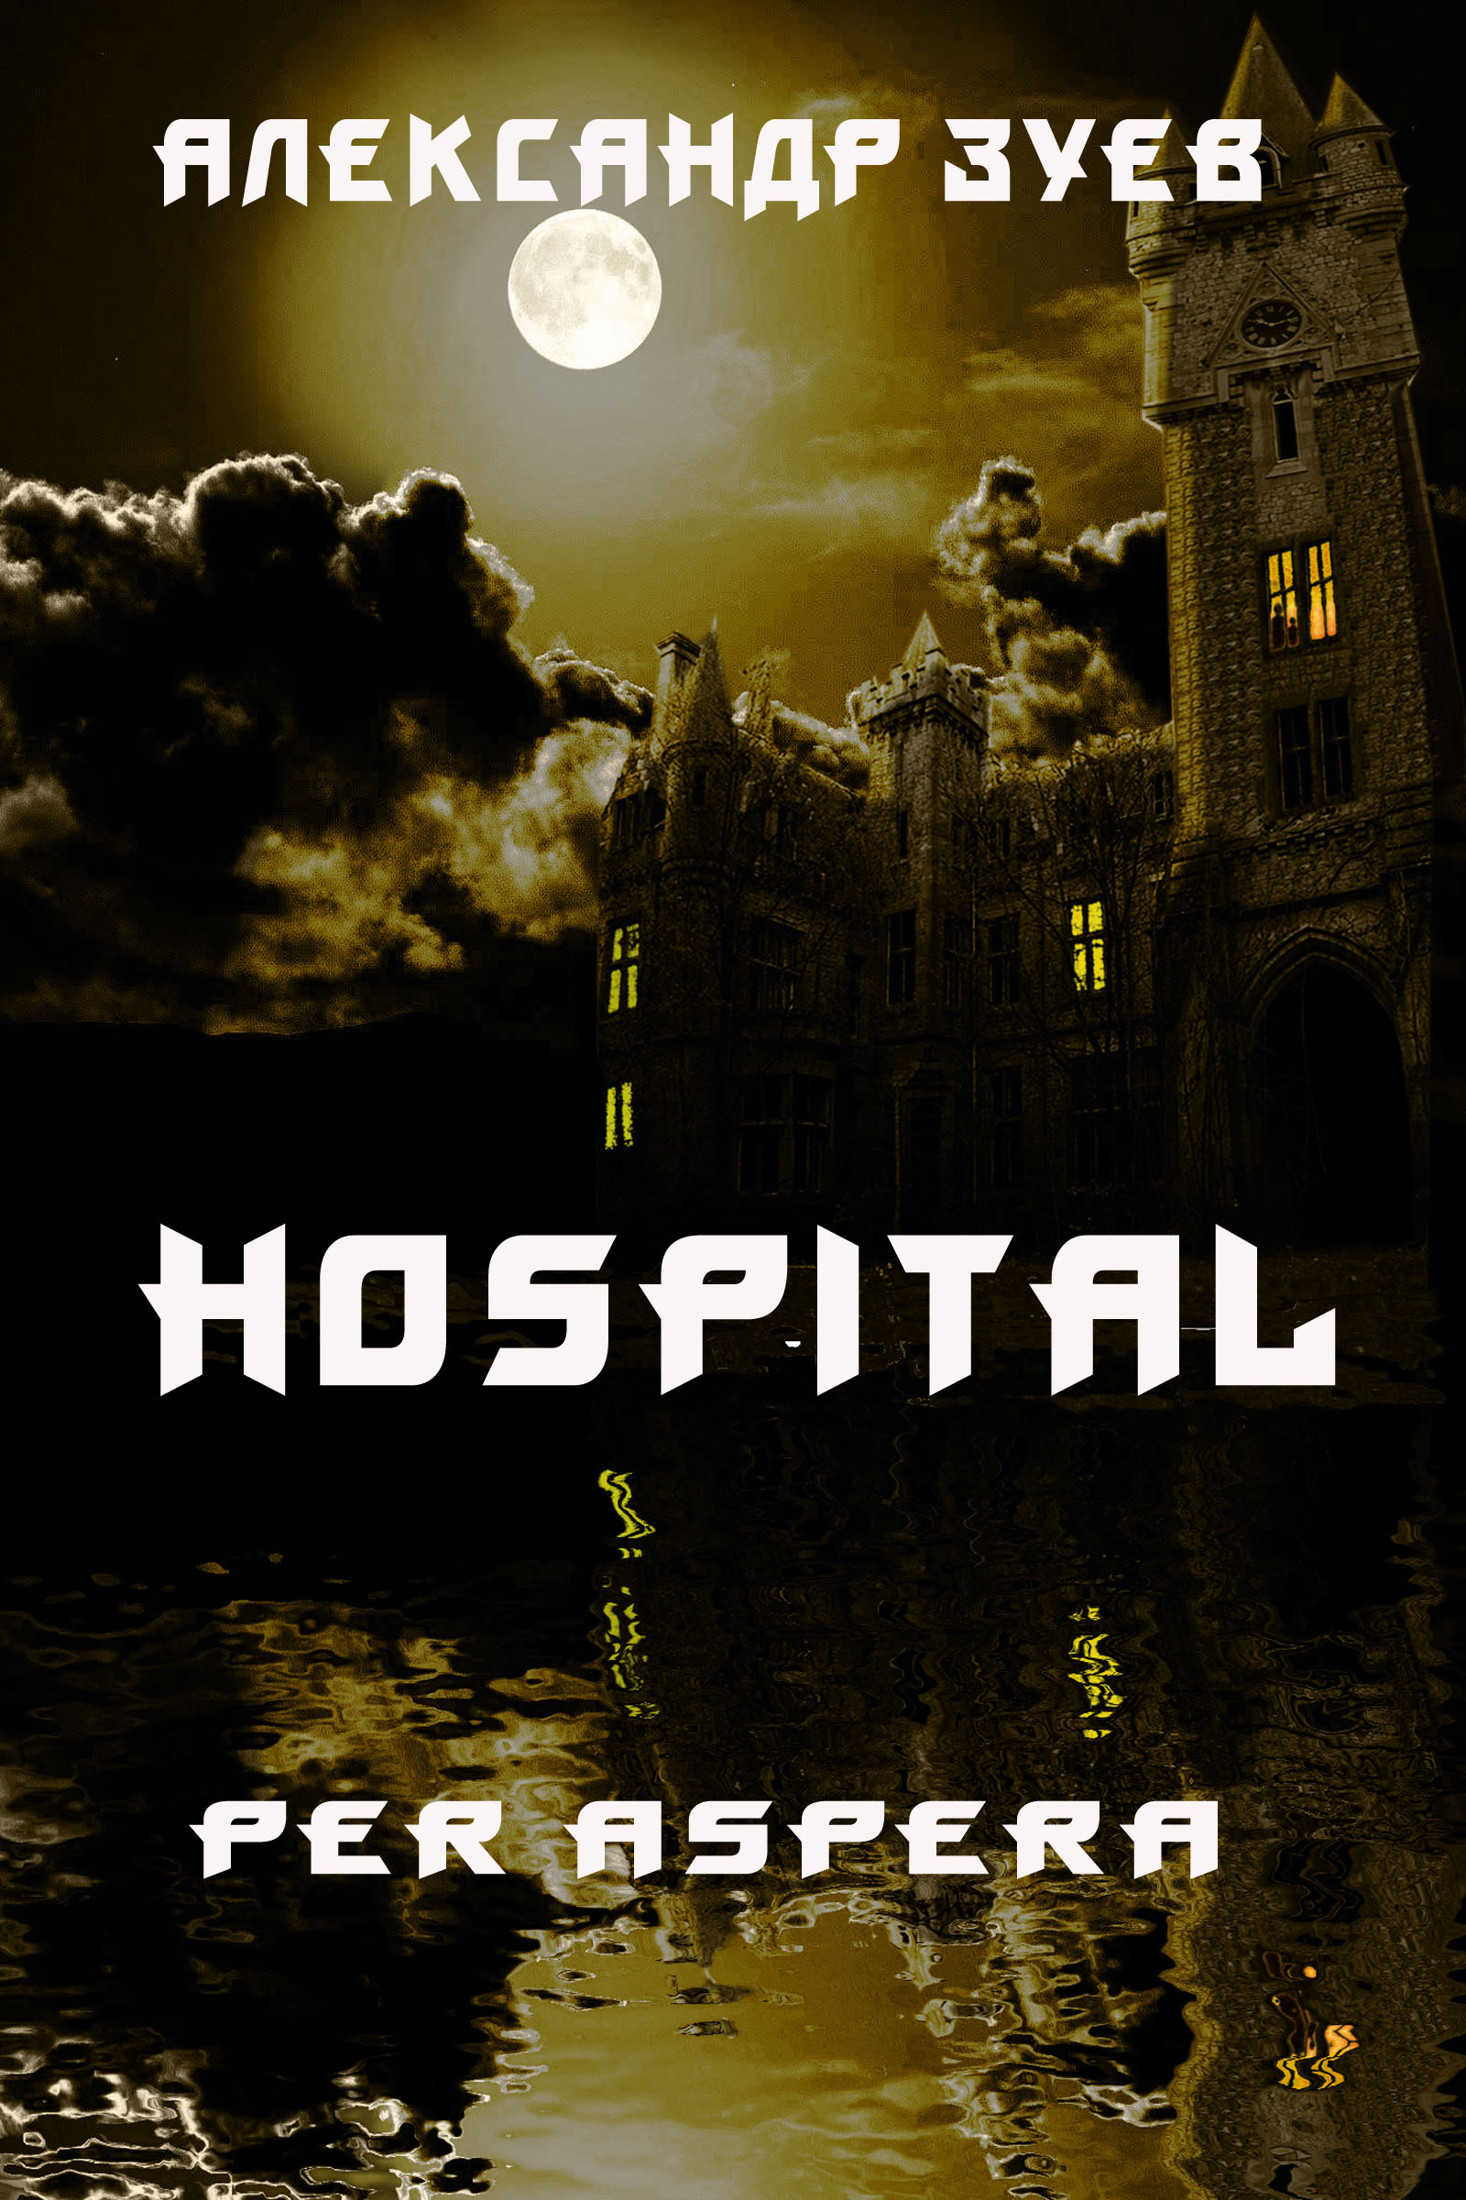 Госпиталь Per Aspera